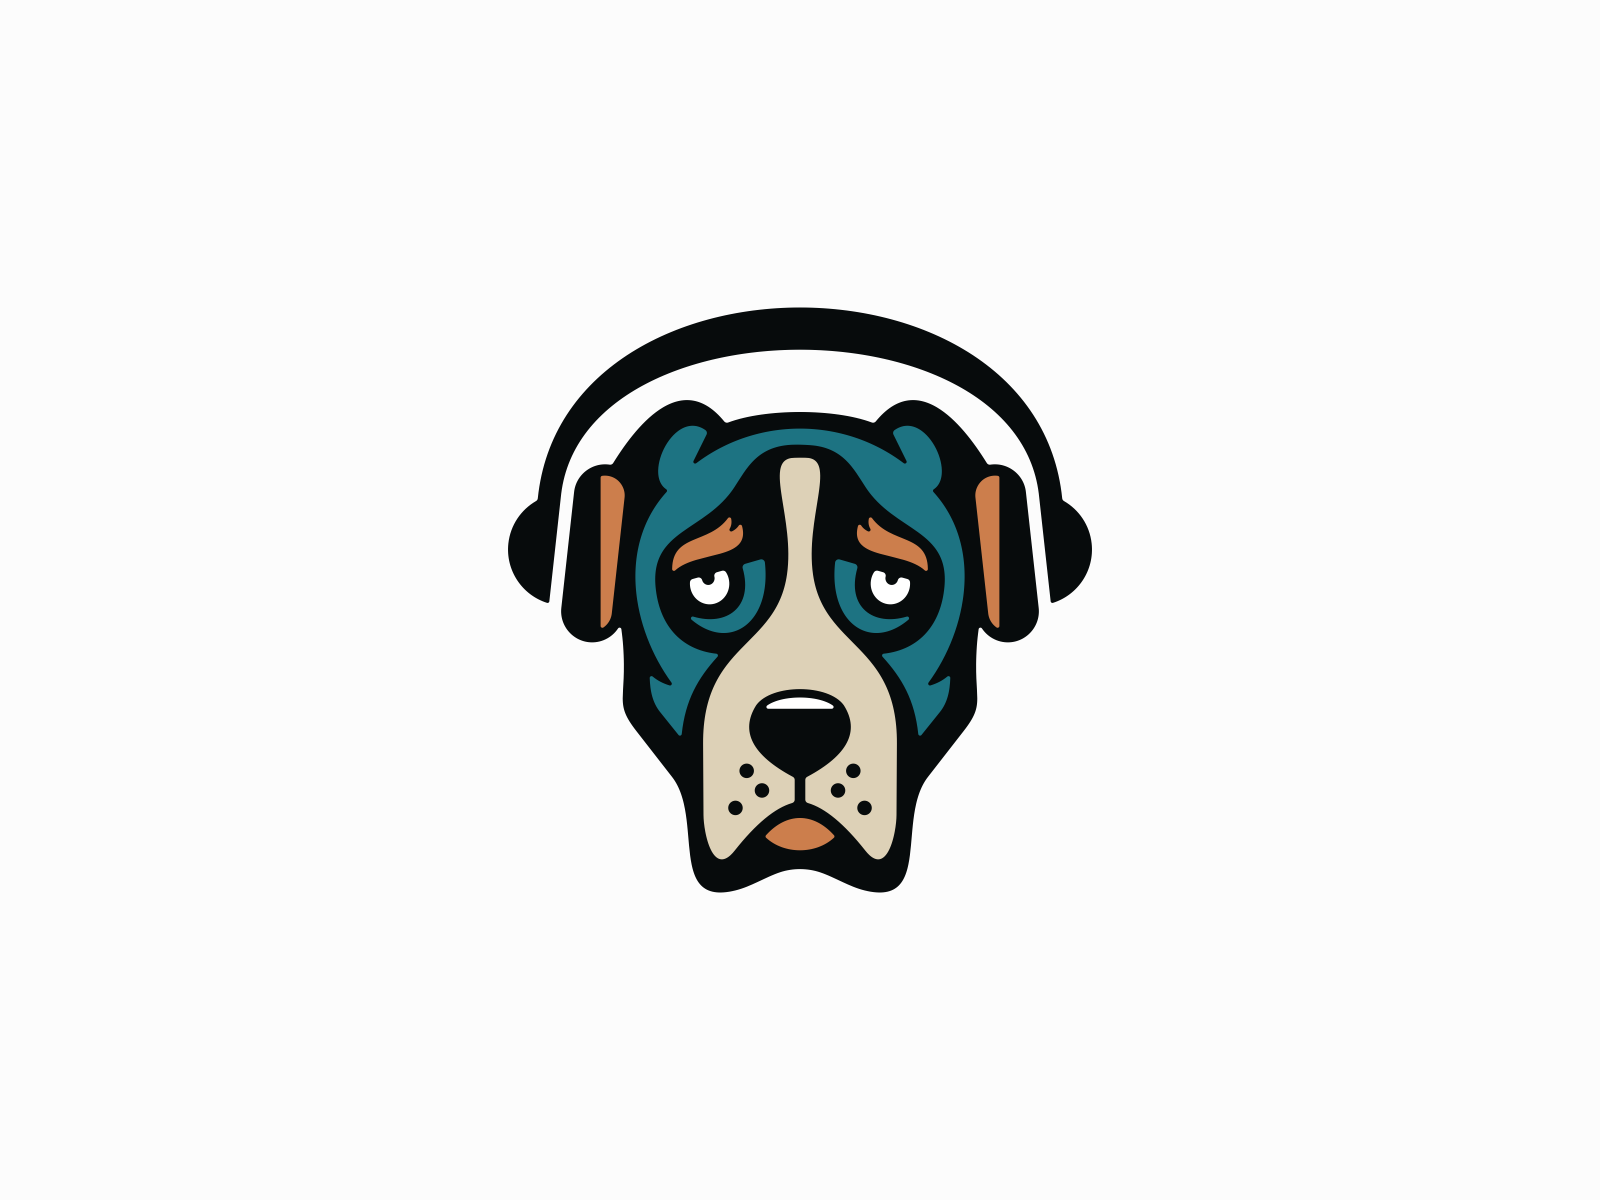 Dog with Headphones by Lucian Radu on Dribbble